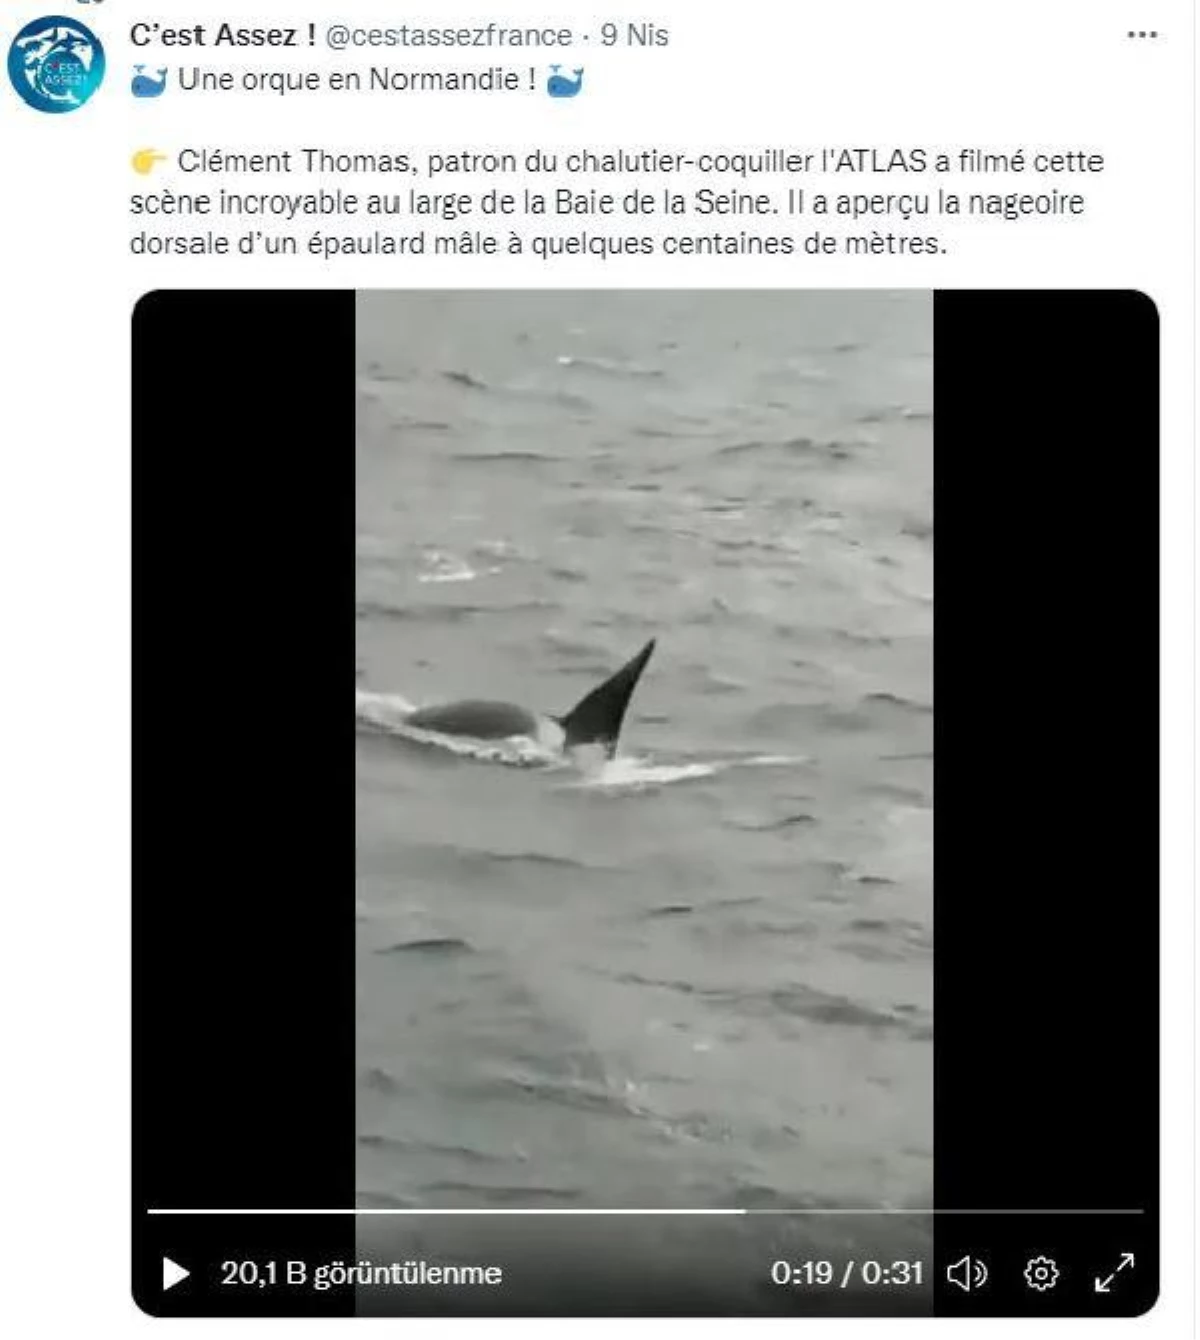 Seine Nehri\'nde mahsur kalan katil balina için hoparlörlü drone\'dan balina sesi yayılacak